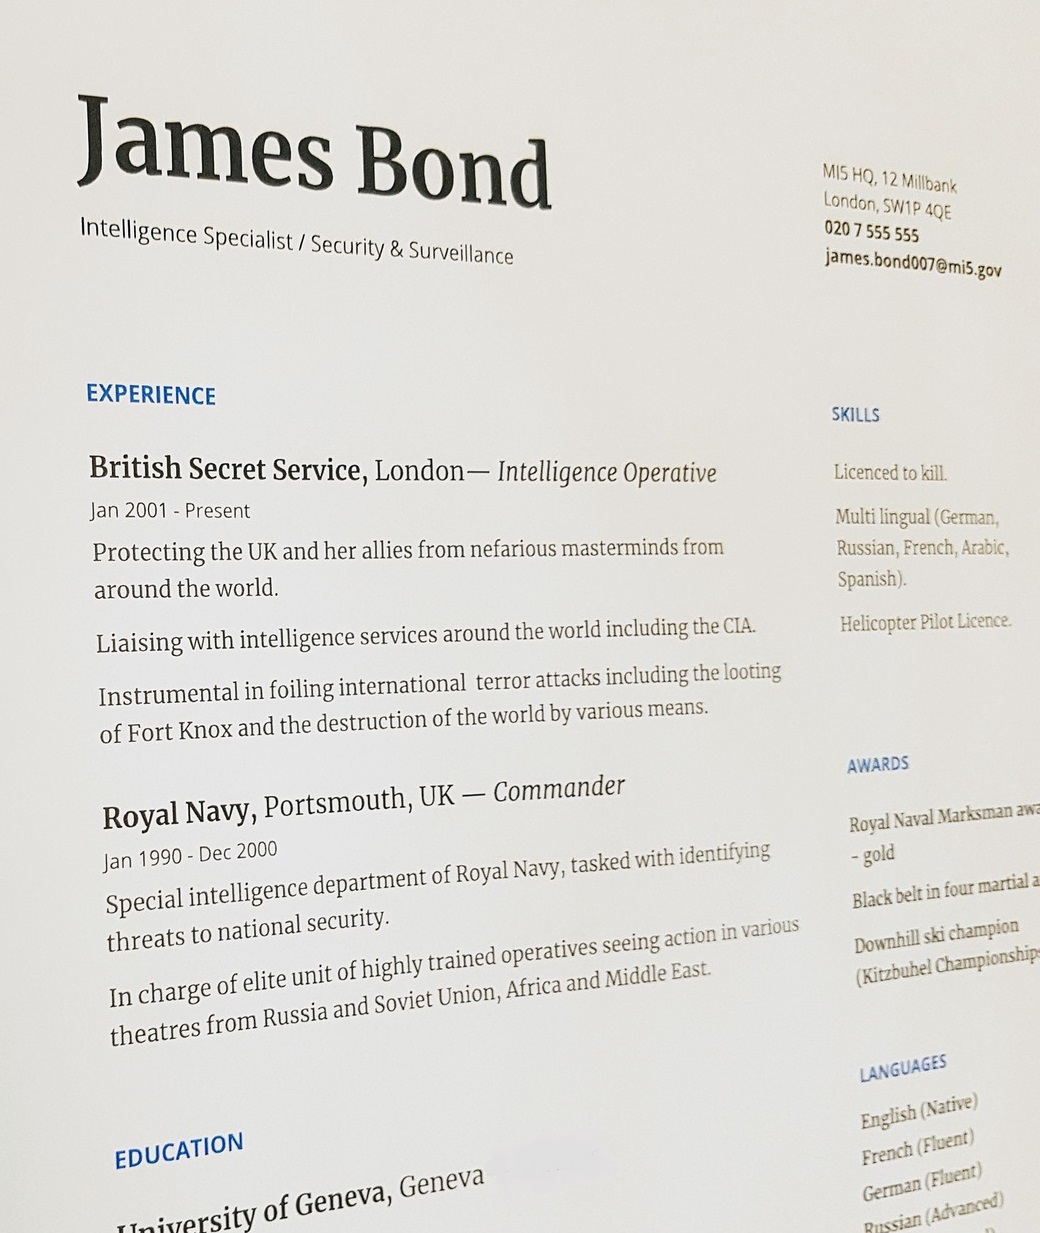 How Long Should A Resume Be Resume James Bond 007 how long should a resume be|wikiresume.com